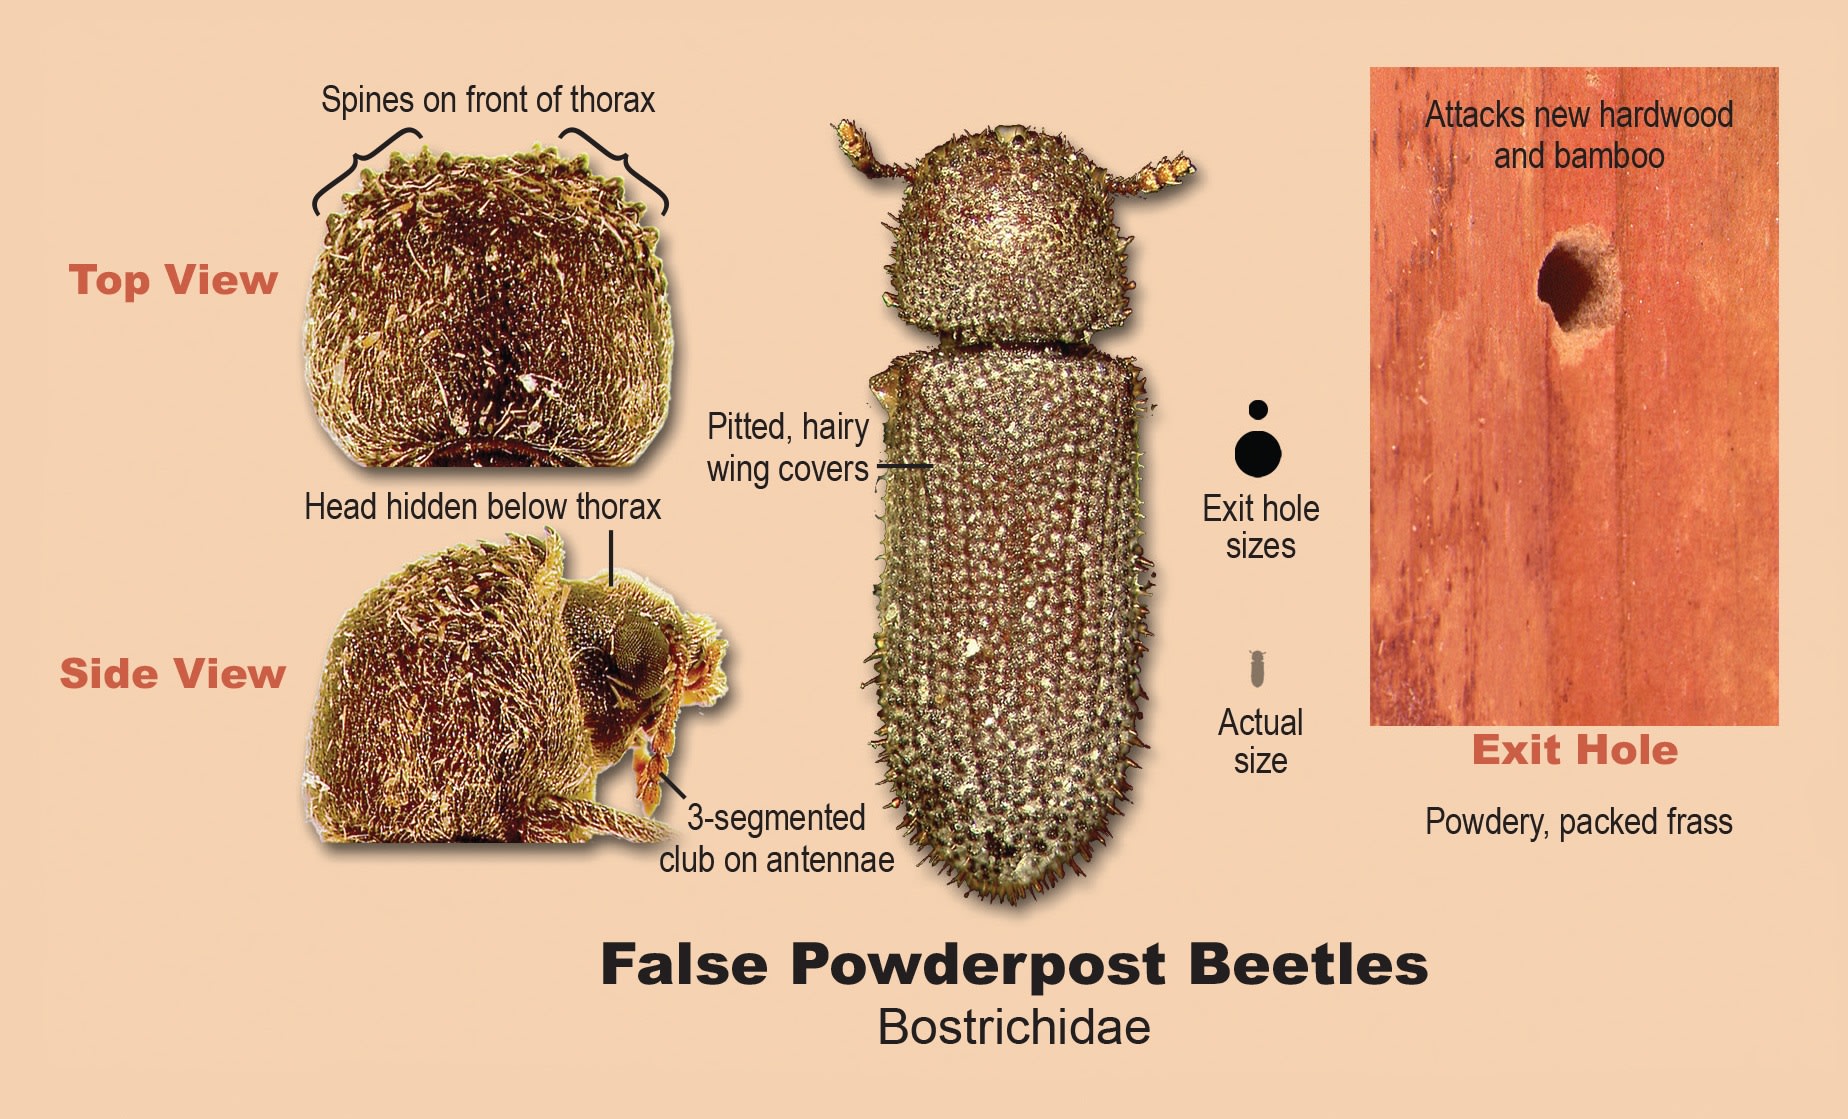 False powderpost beetles